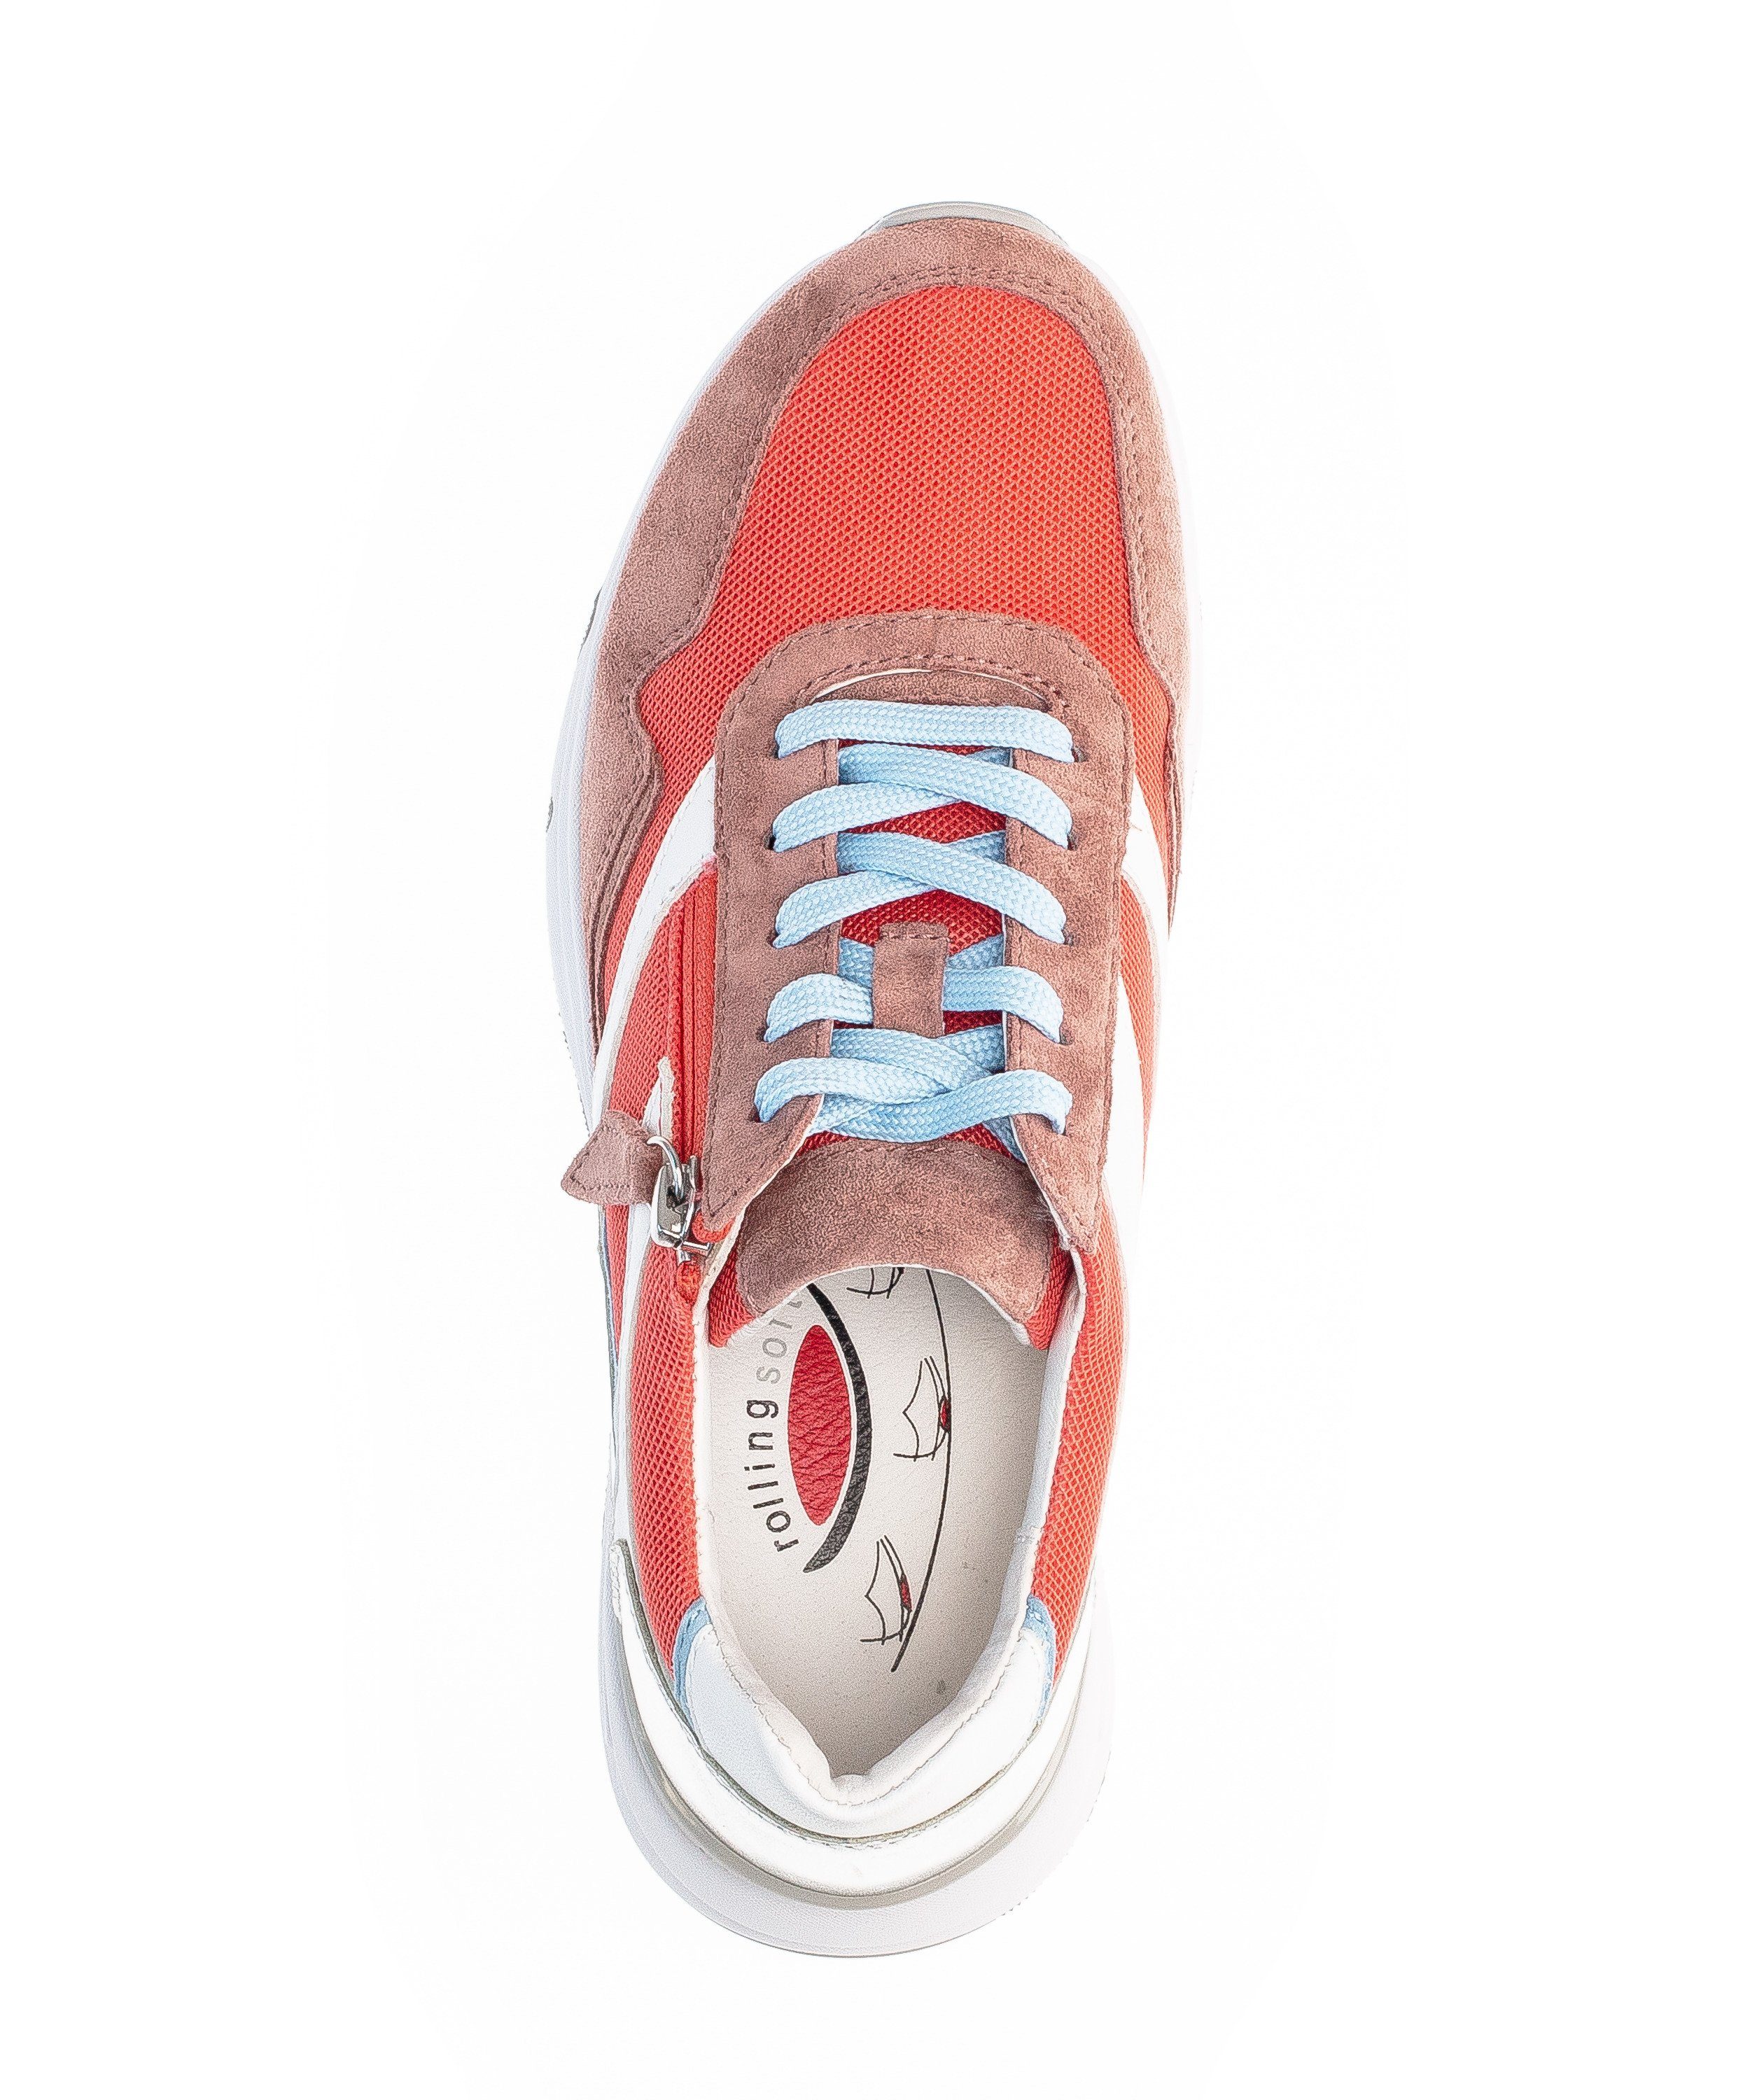 Gabor Comfort Sneaker Rot (coral/hummer/sky / 63)